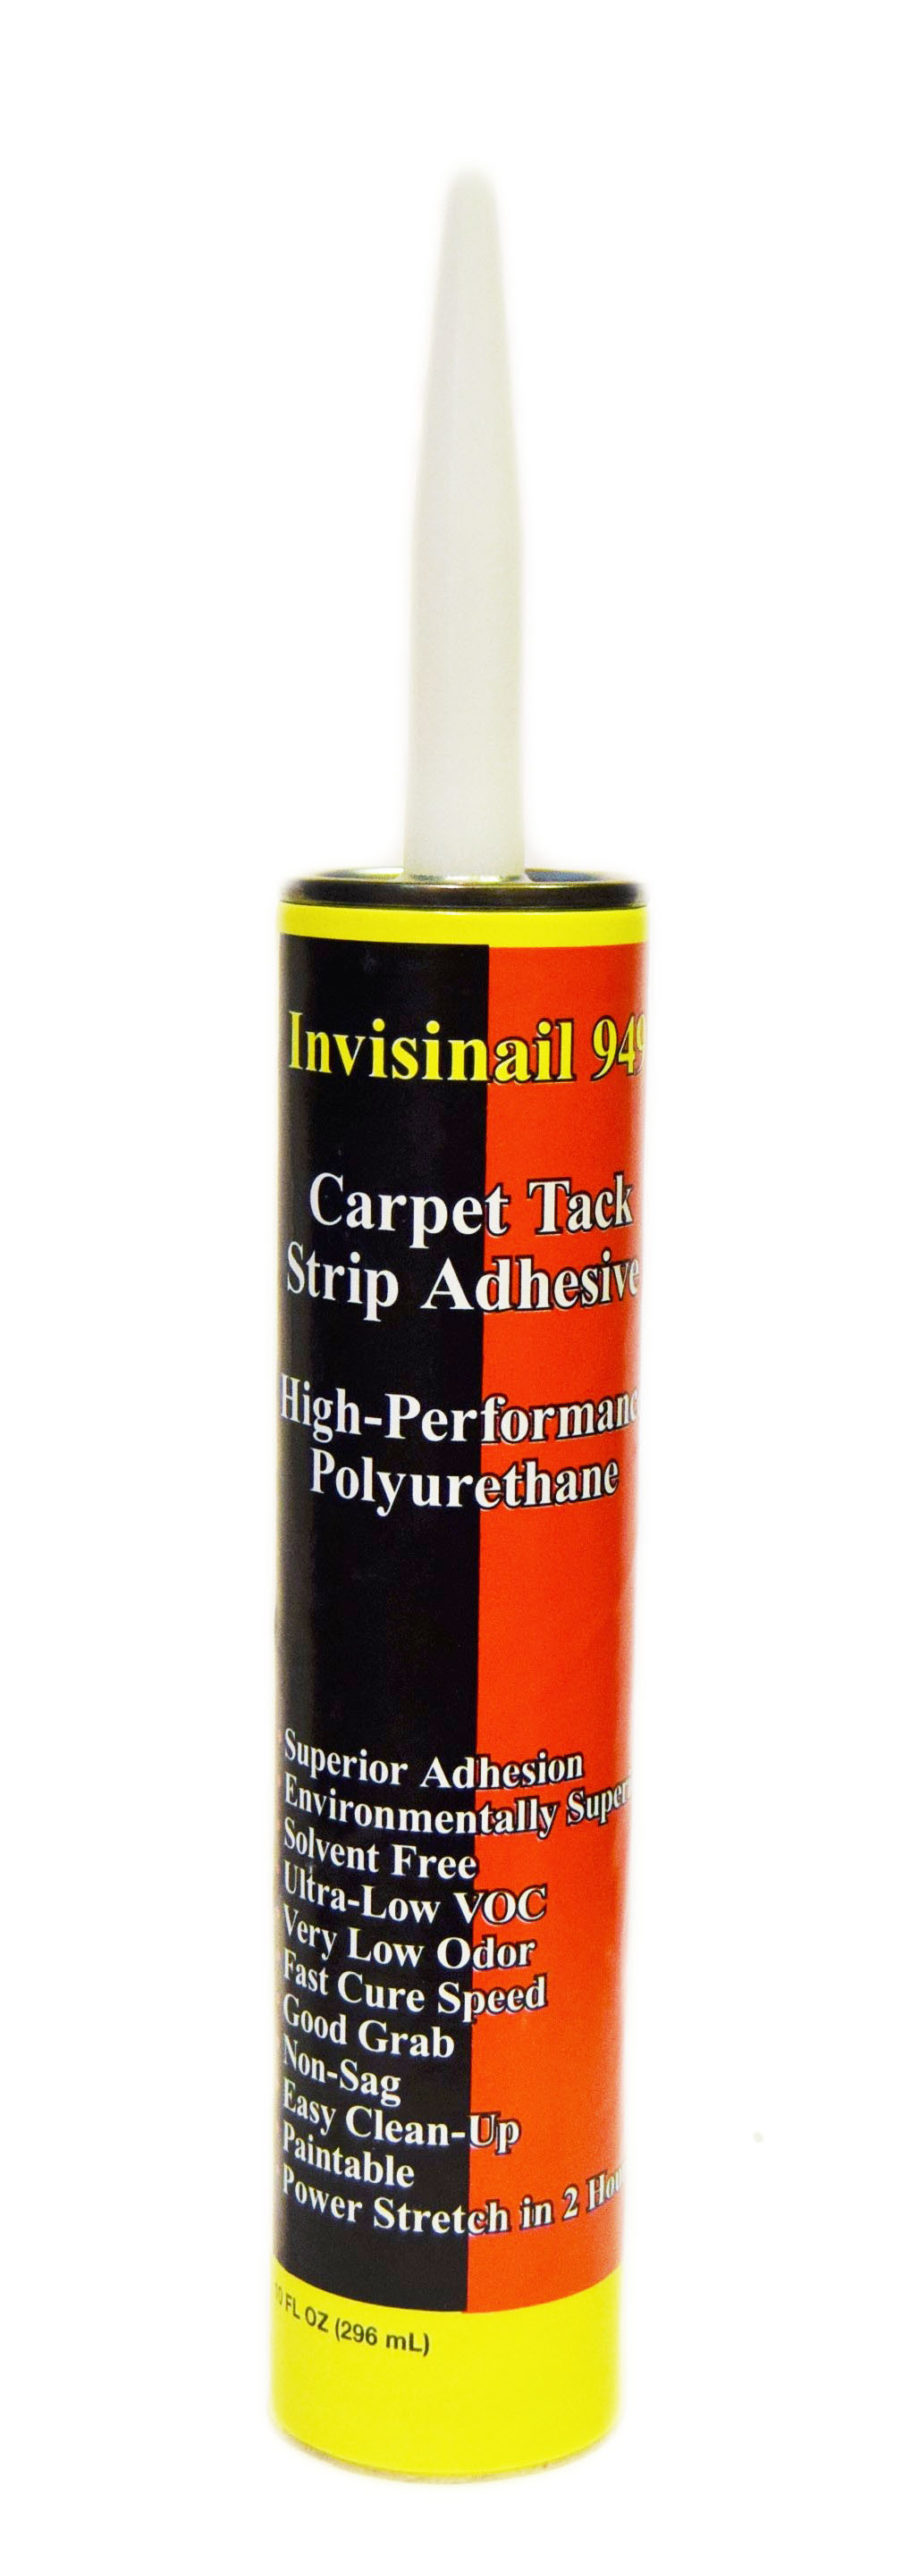 Adhesives 949 Invisinail Capret Tack Strip Adhesive